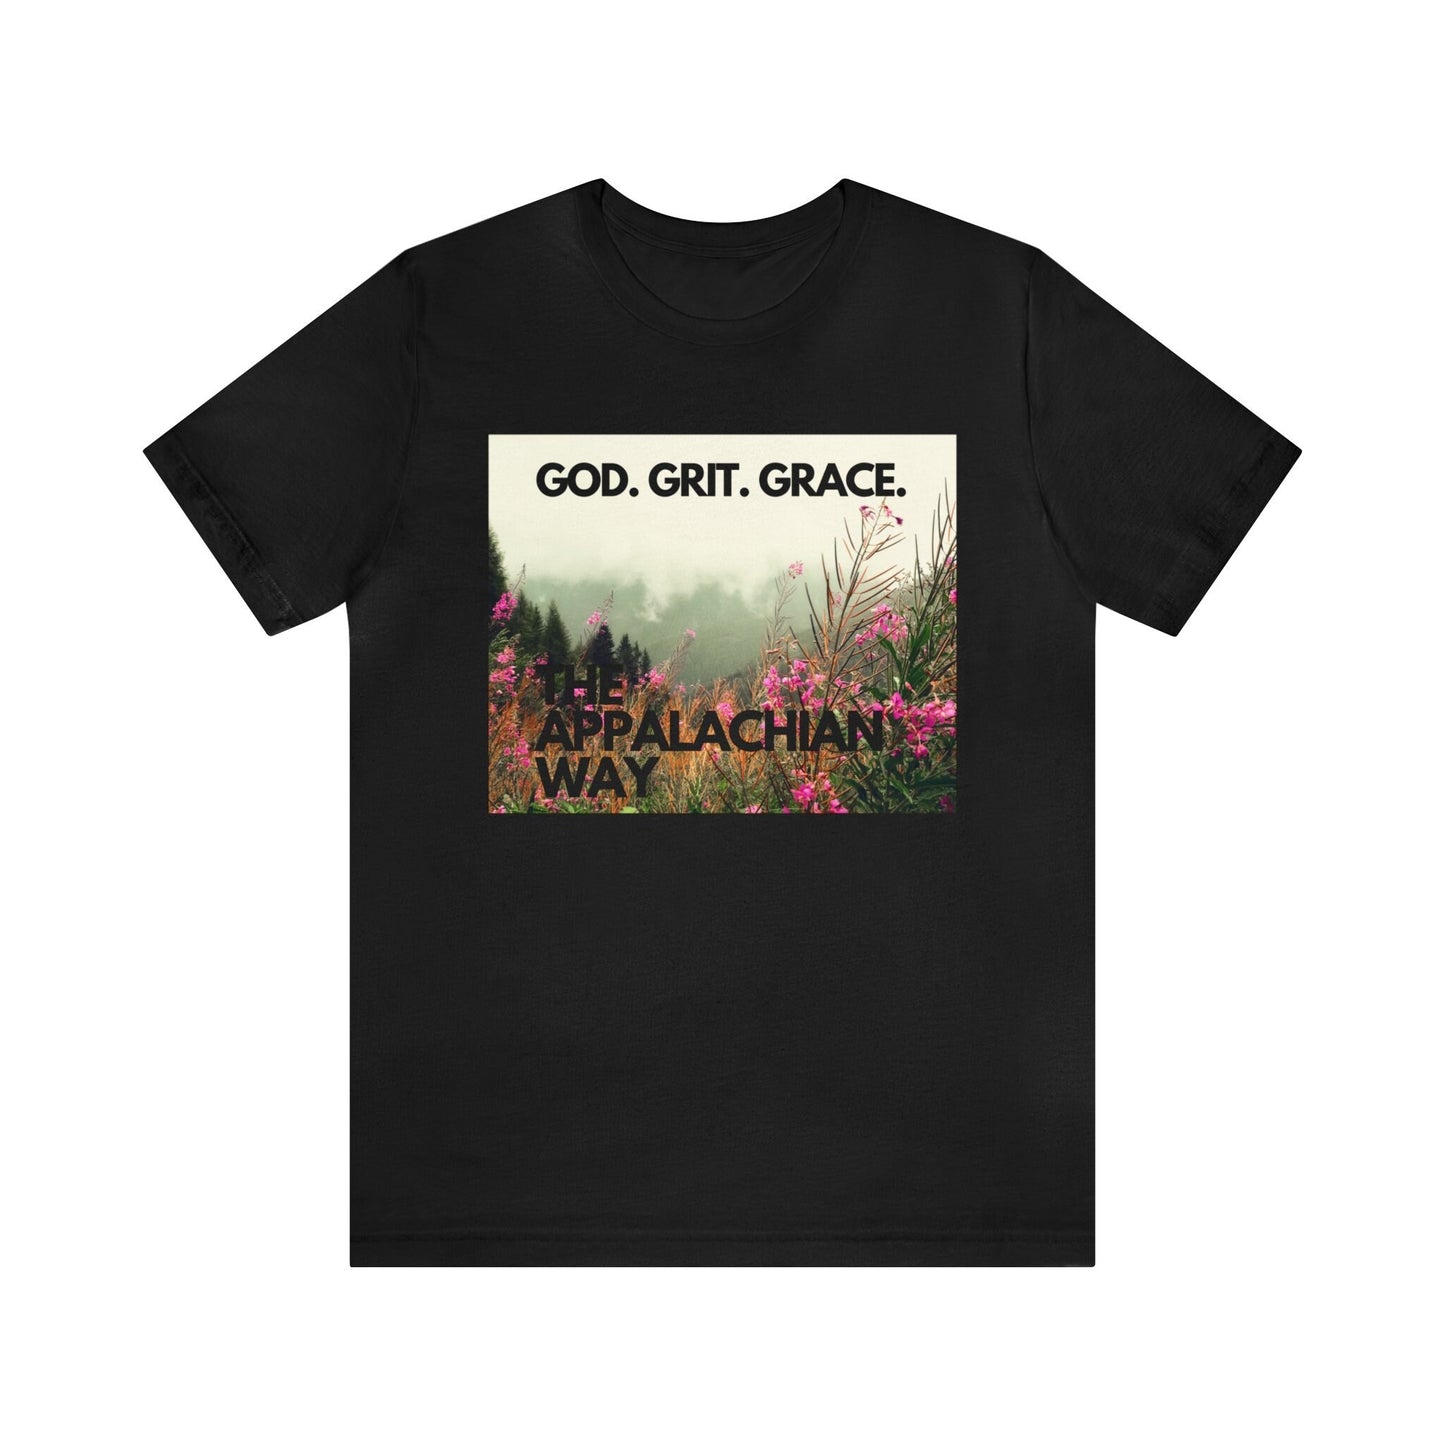 The Appalachian Way God Grit Grace Graphic T-shirt